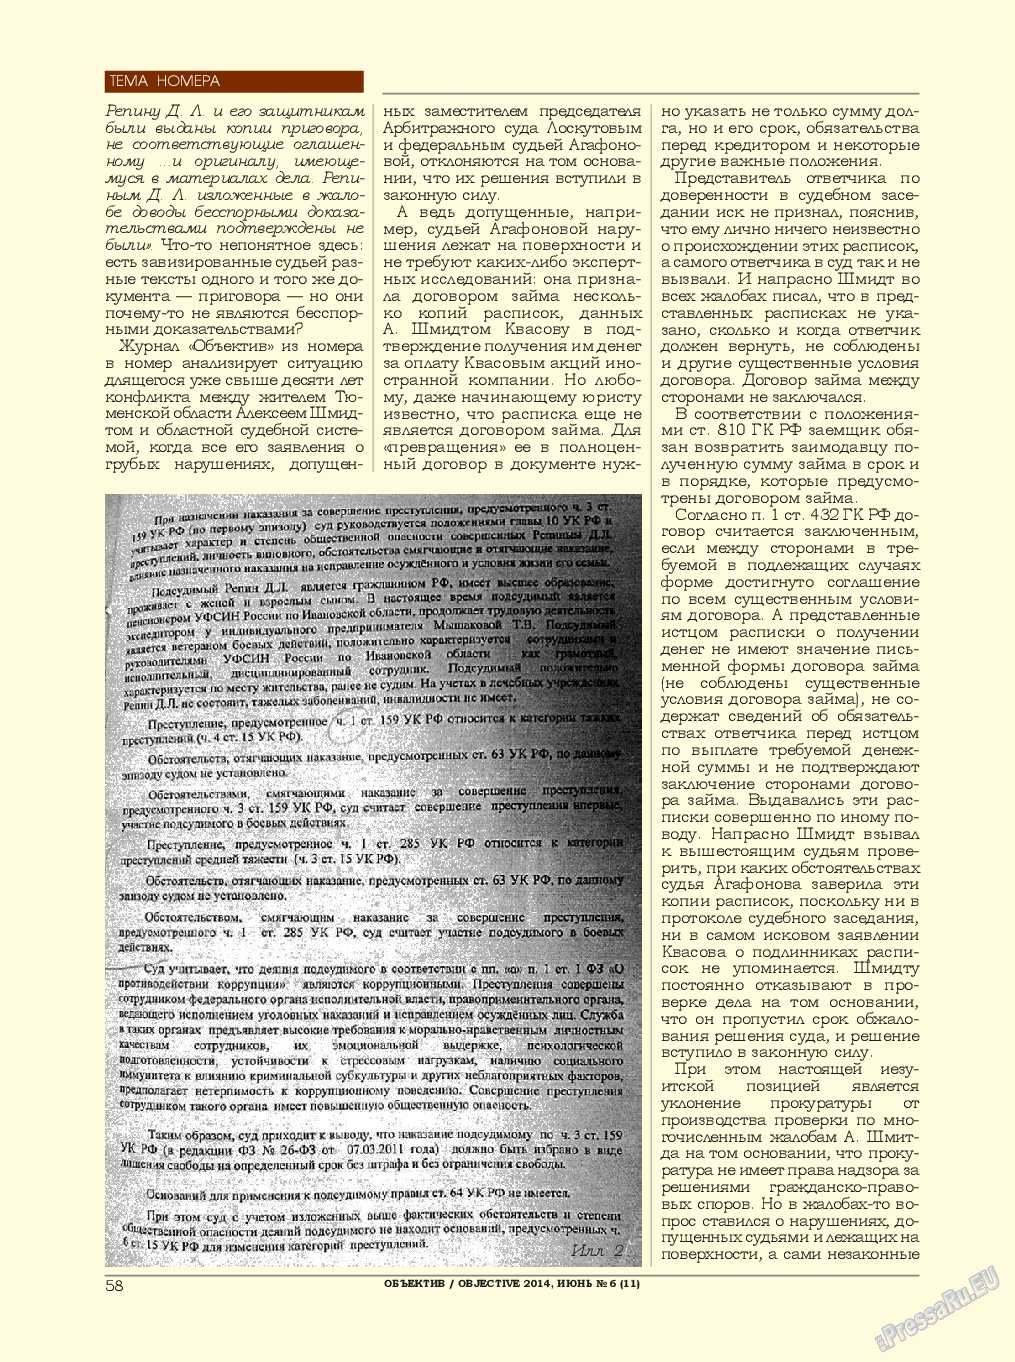 Объектив EU, журнал. 2014 №6 стр.58